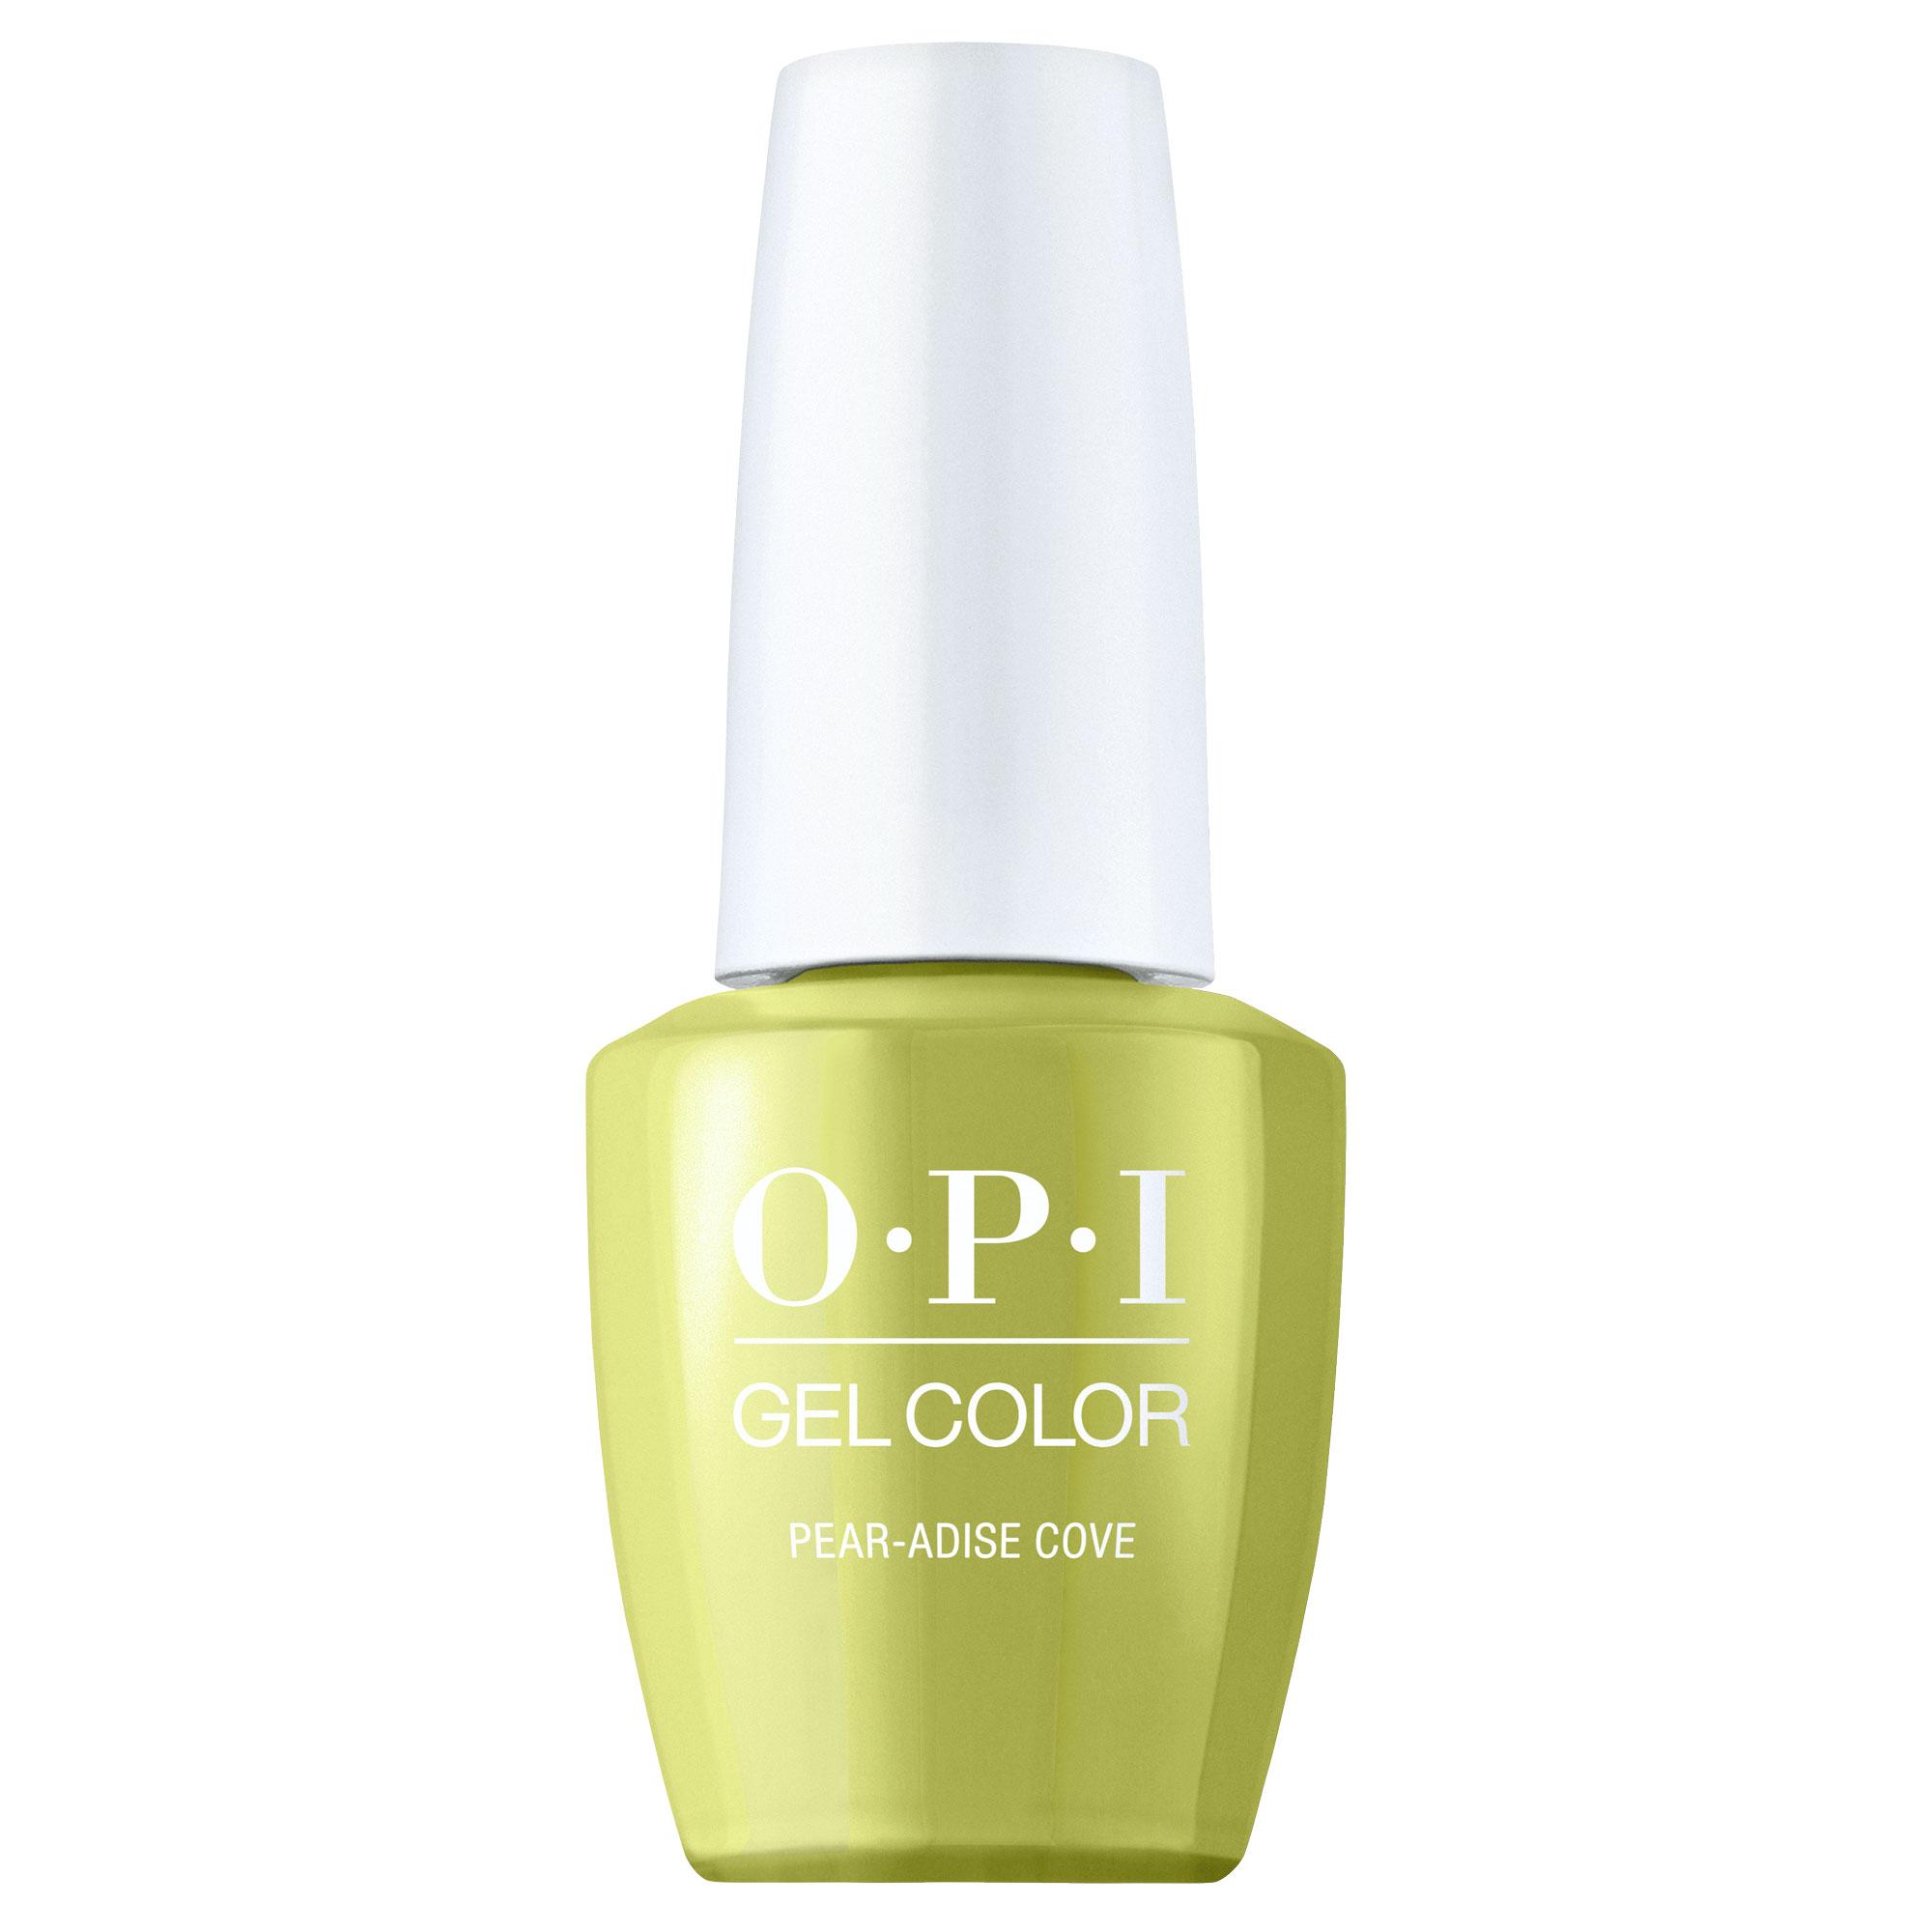 OPI Gel Color 360 - Pear-adise Cove